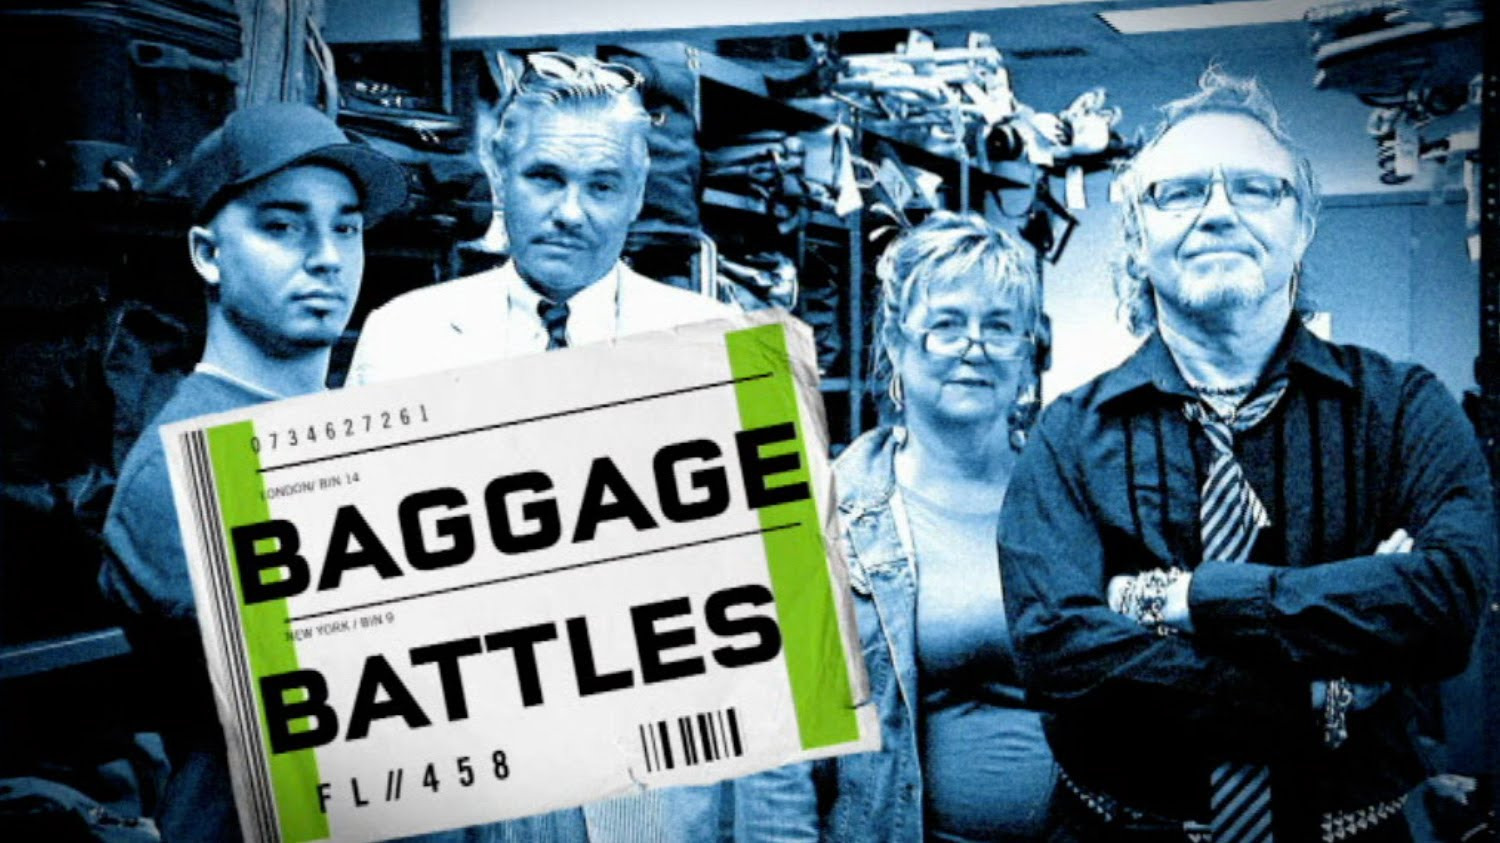 Show Baggage Battles